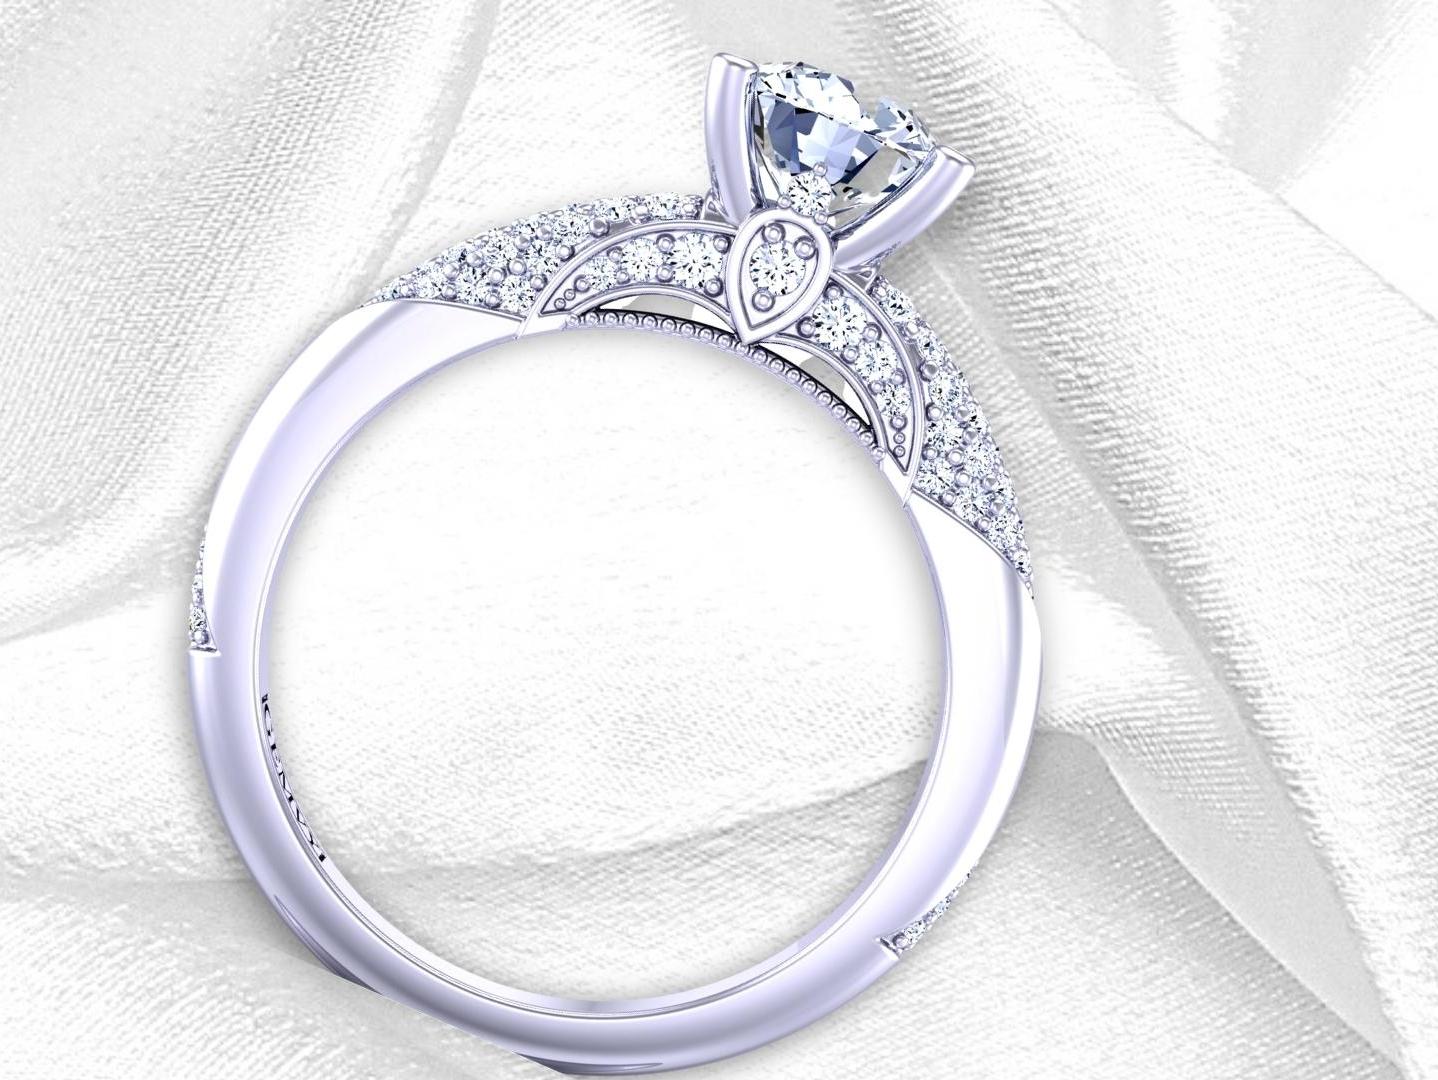 Tiffany-style 4-prong micro-pavé ring